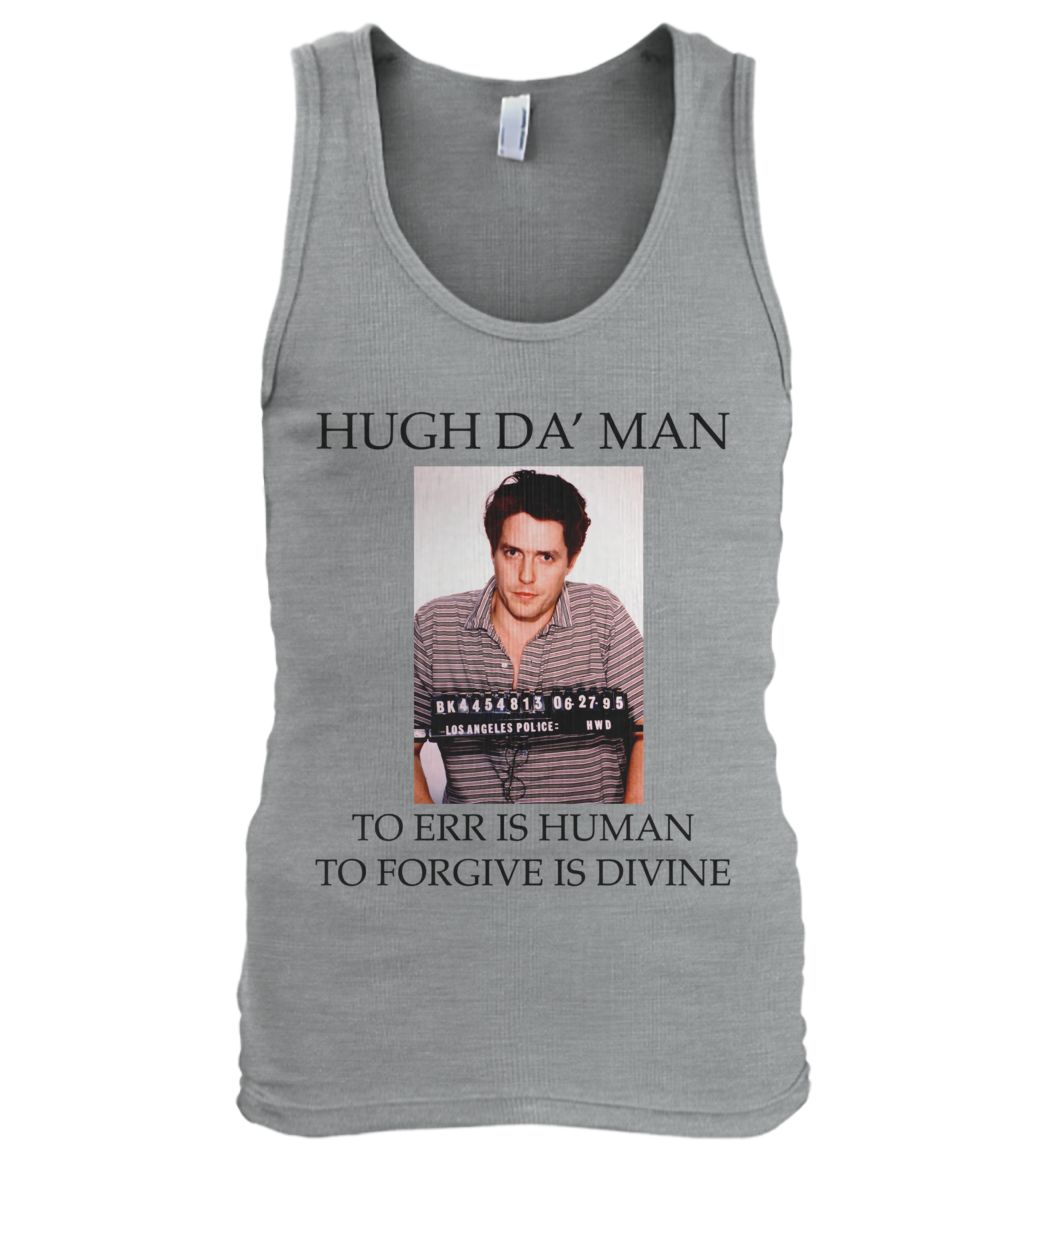 Hugh da' man to err is human to fogive is divine men's tank top